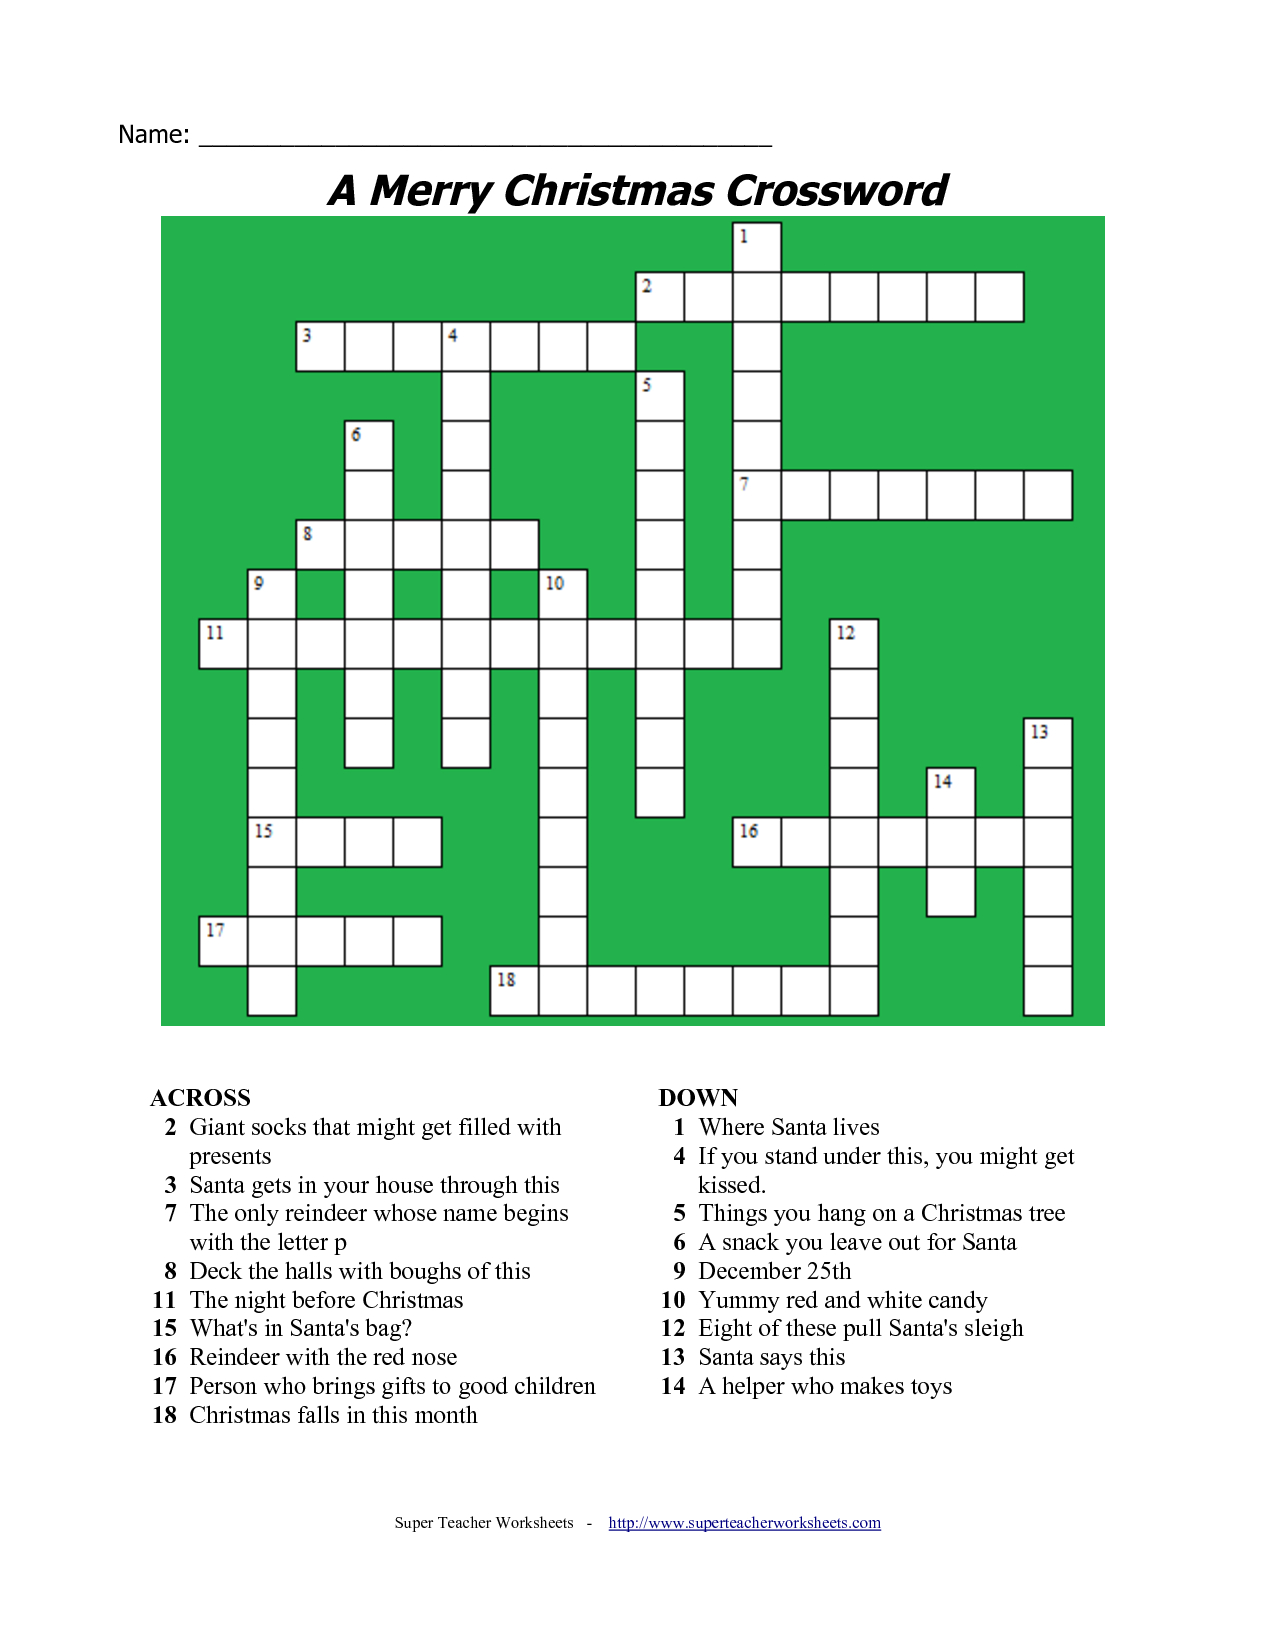 20 Fun Printable Christmas Crossword Puzzles | Kittybabylove - Free Printable Christmas Puzzle Sheets